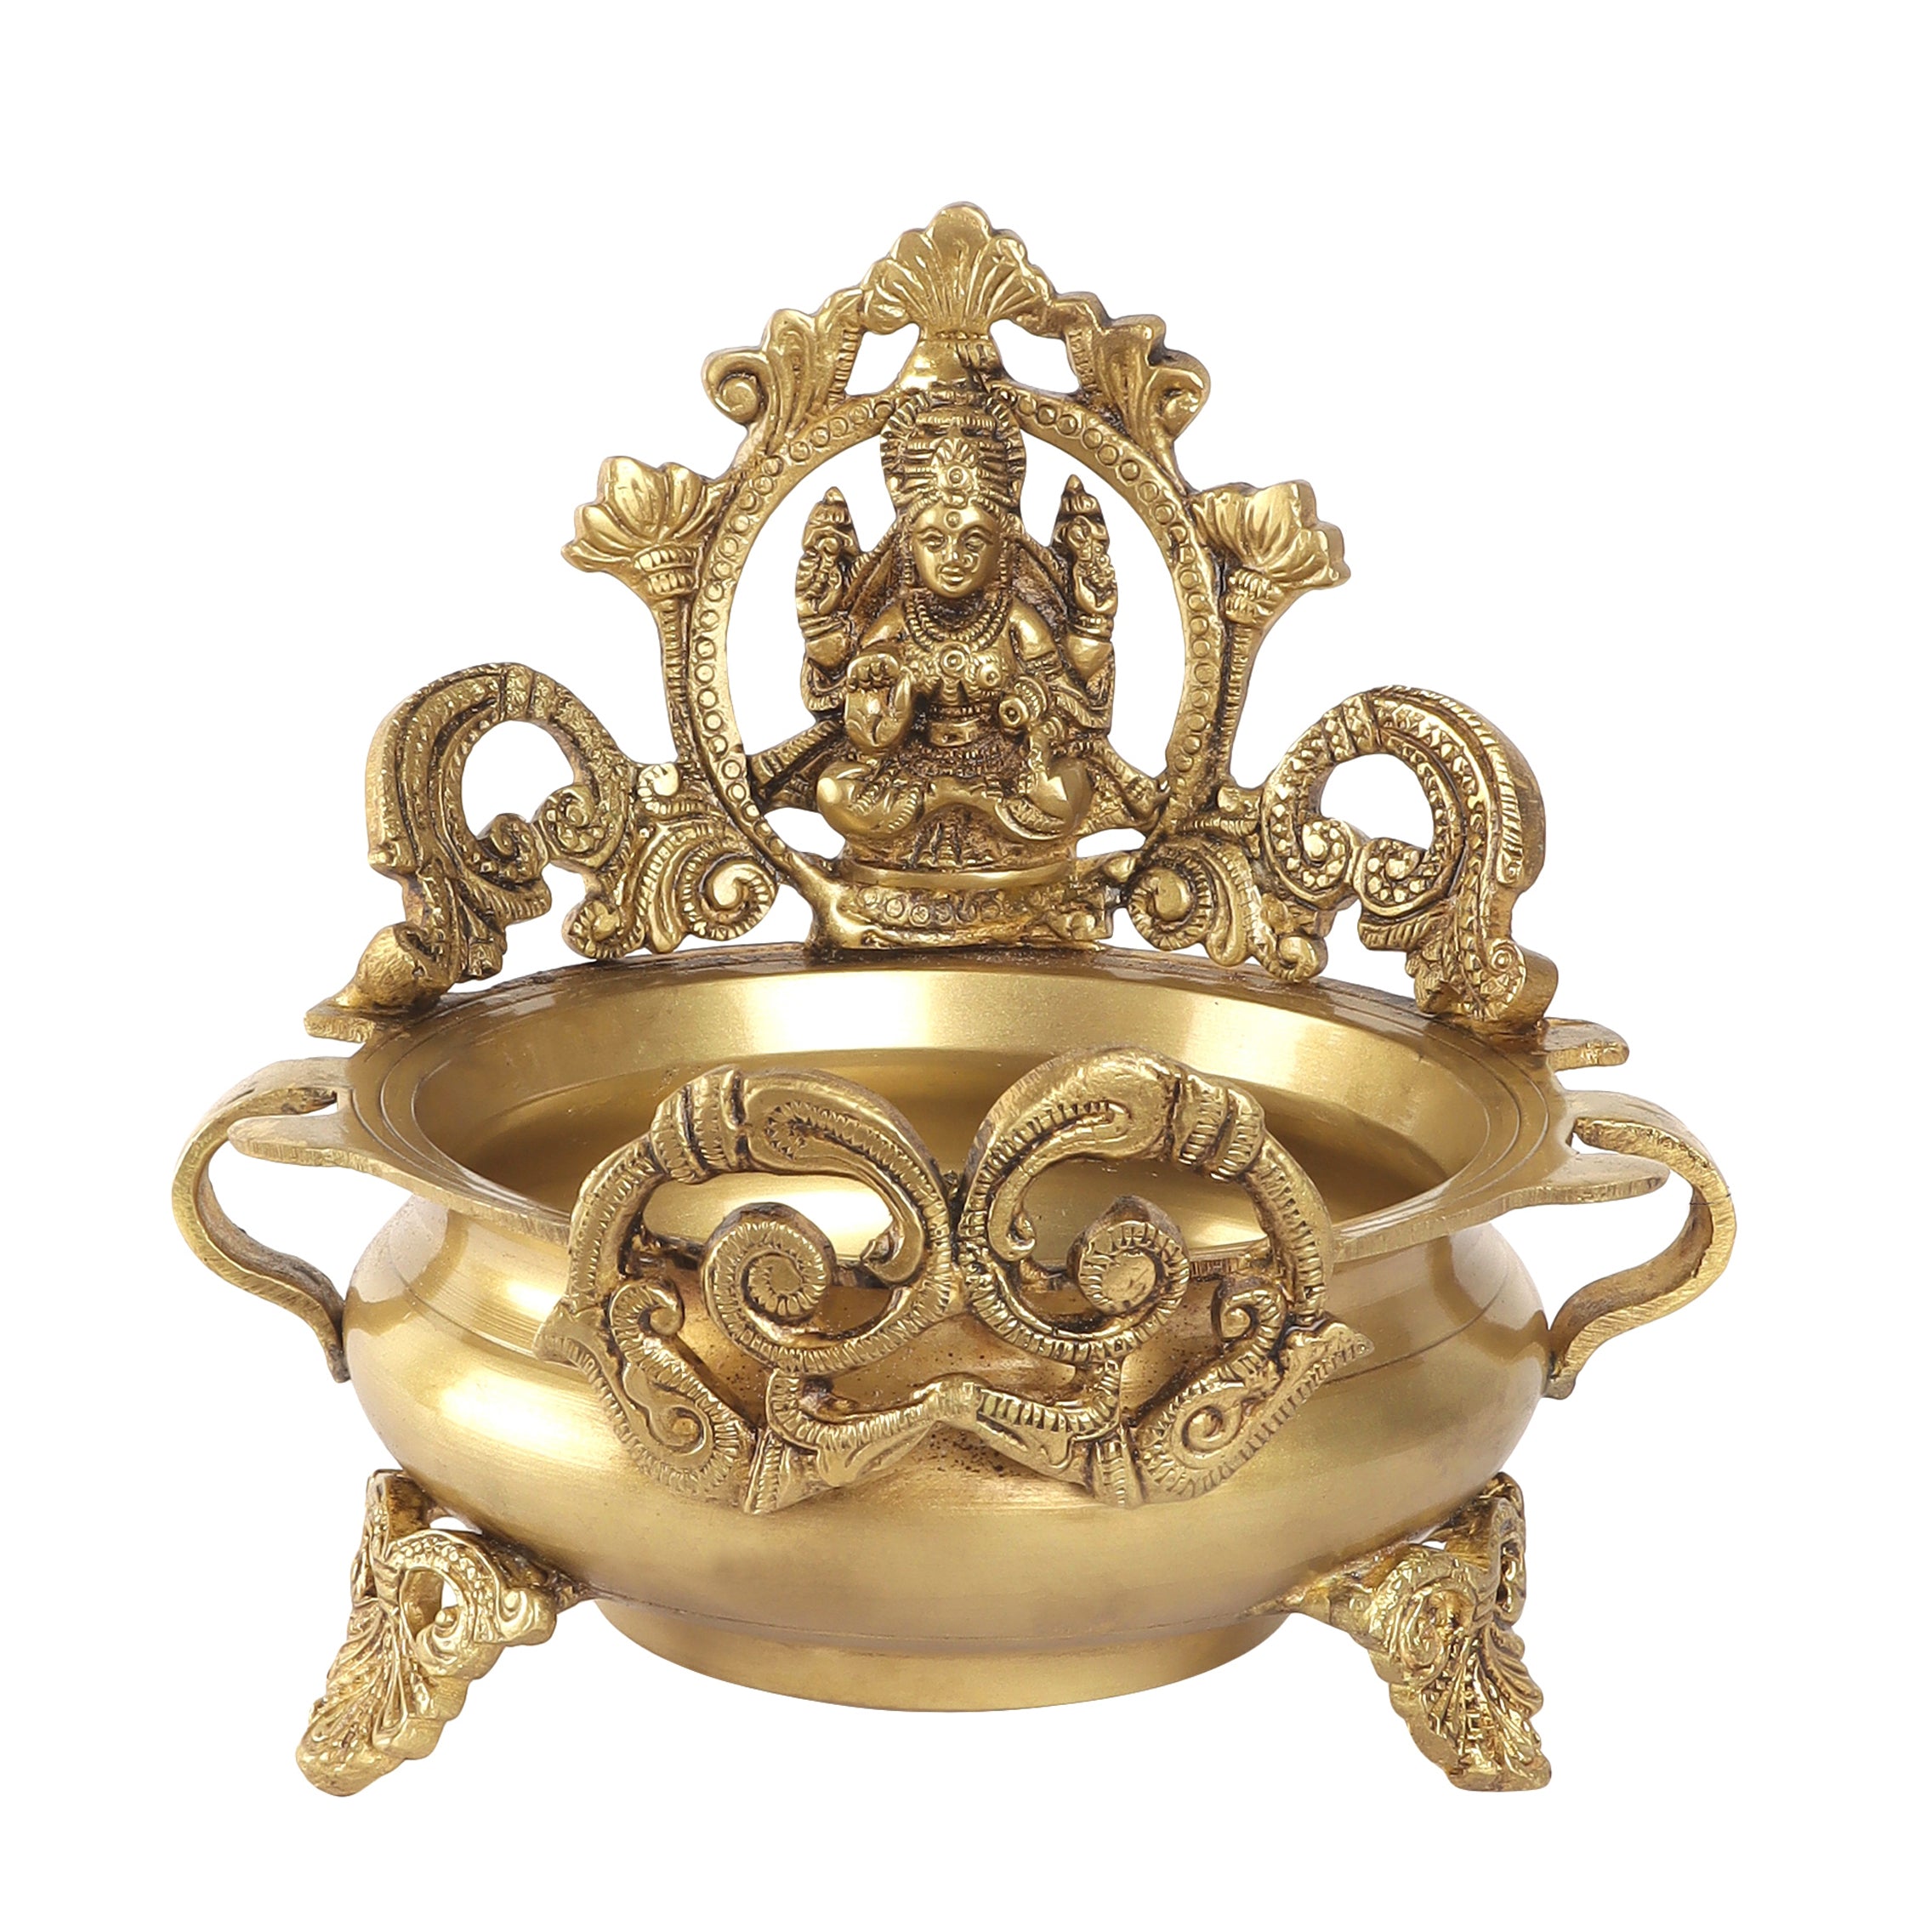 Brass Ethnic Indian Carved Laxmi Design 7 Inches Brass Urli Decor Bowl Showpiece